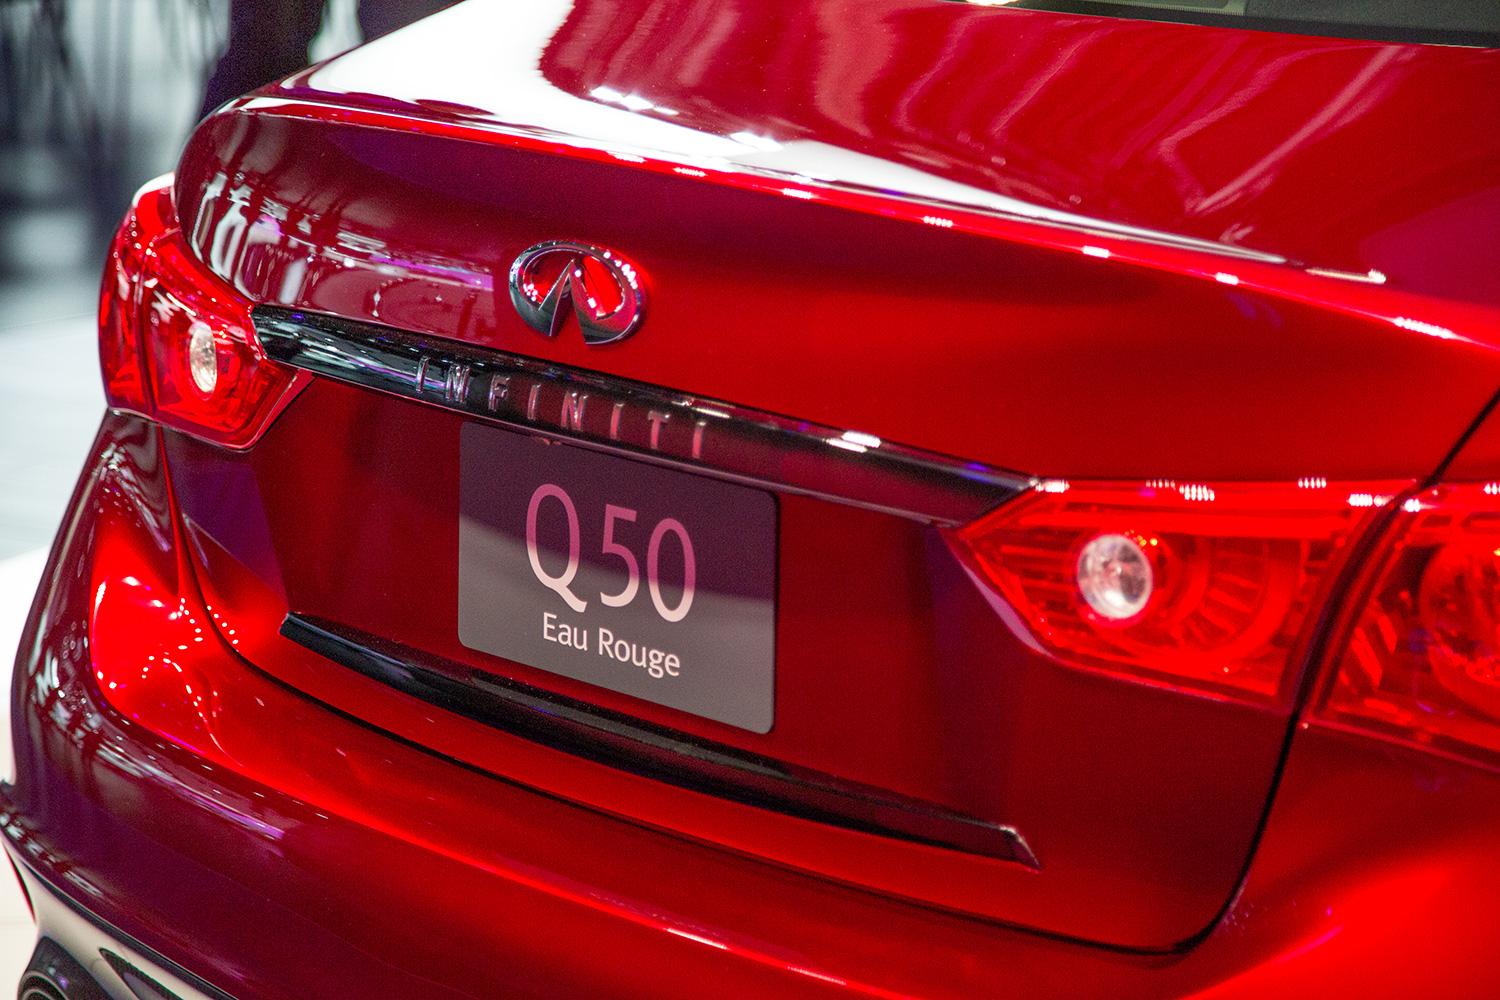 Infiniti Q50 Eau Rouge rear angle macro